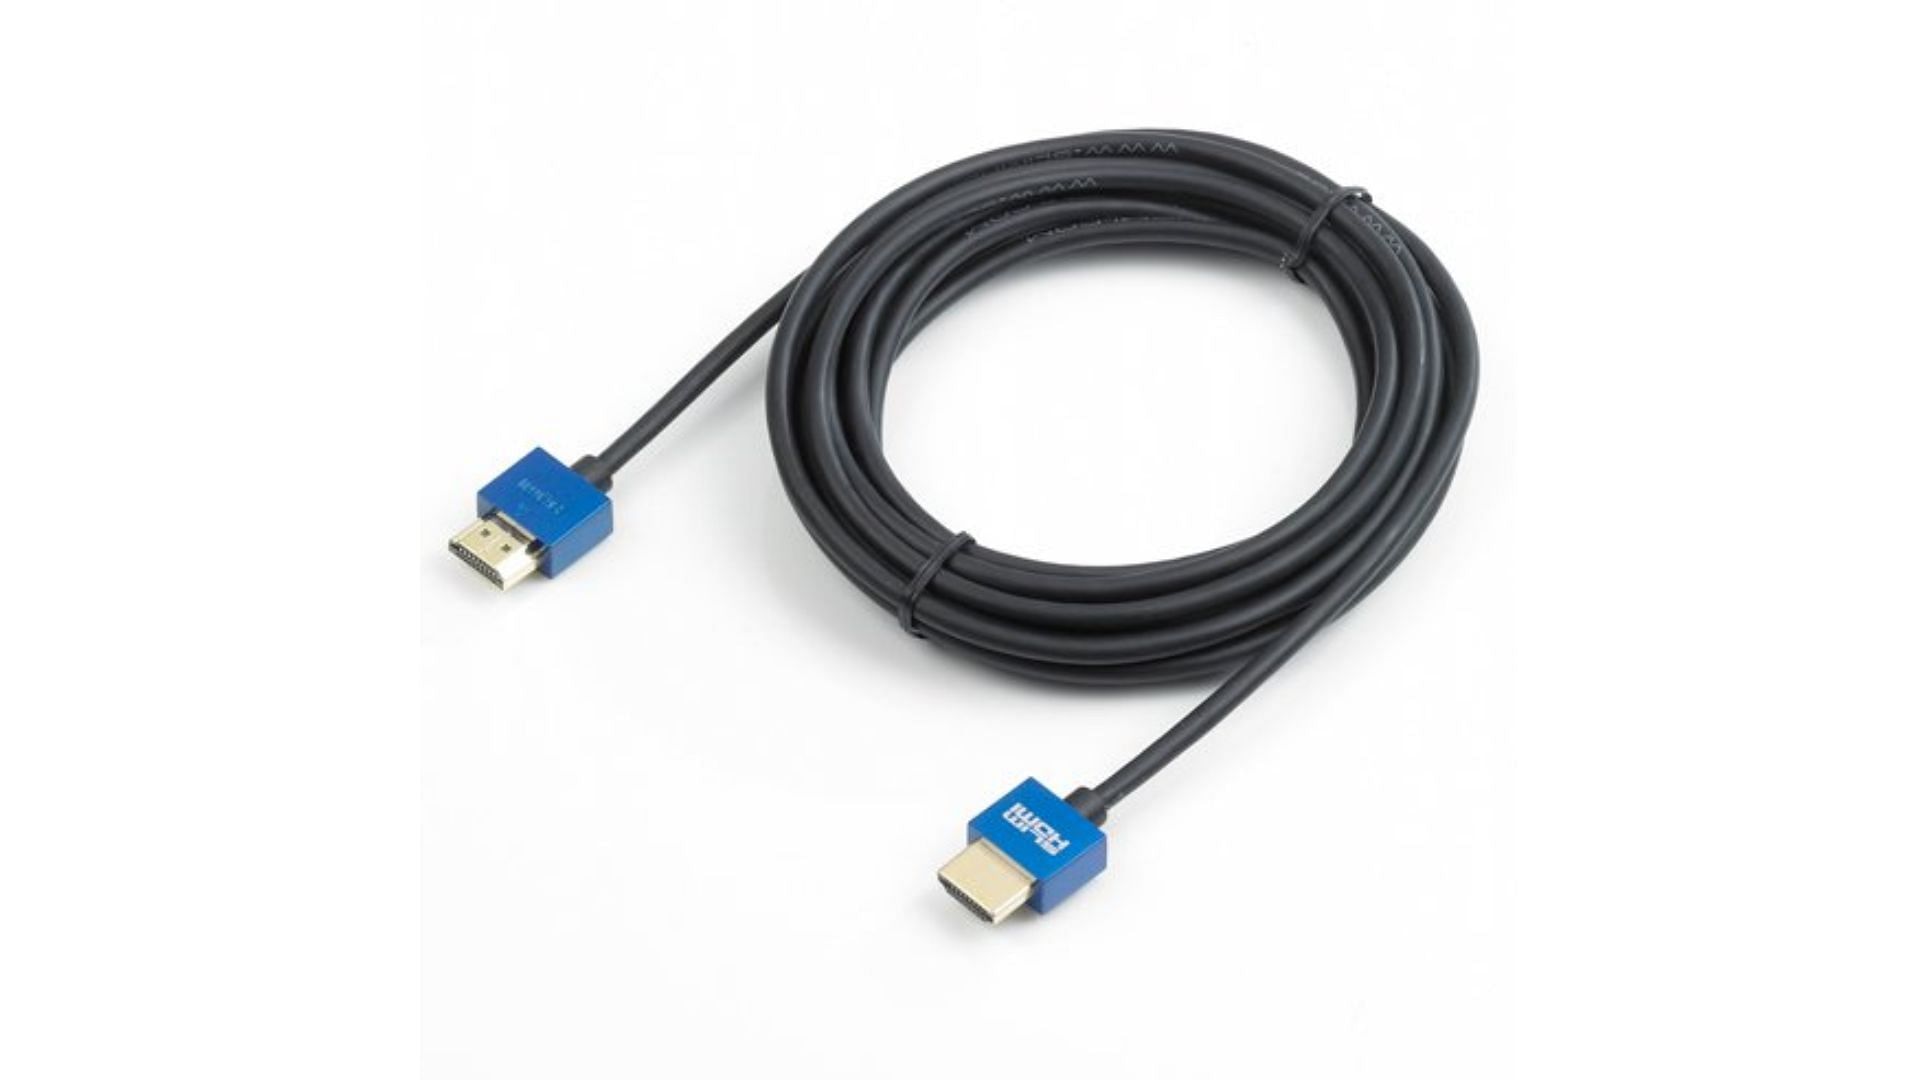 The ultra-slim HDMI cable for PS5 (Image via SlimHDMI/Amazon)